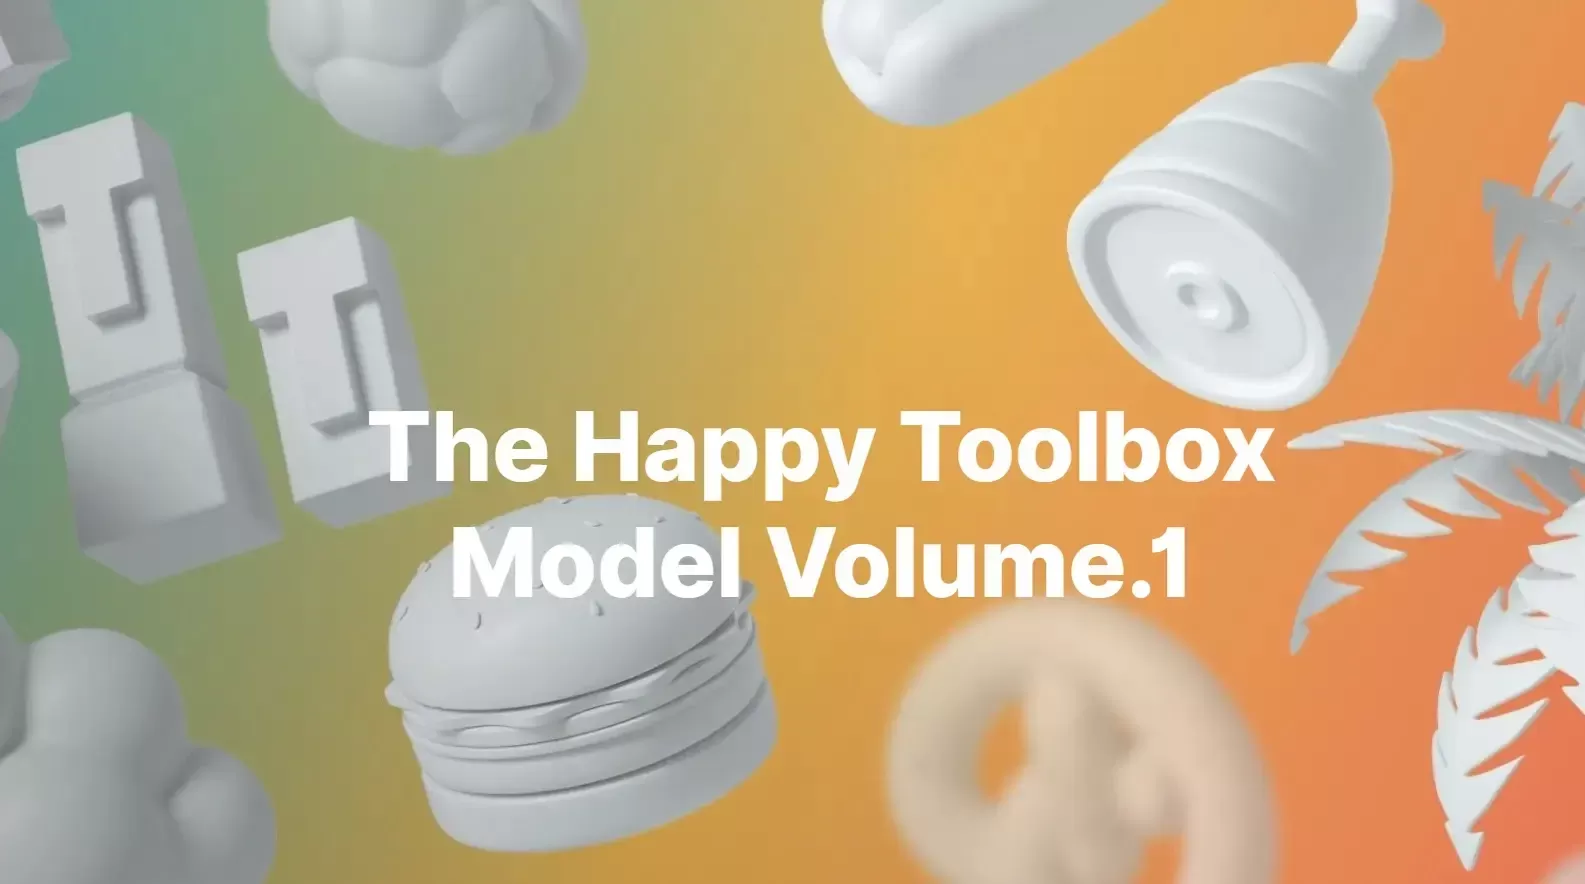 The Happy Toolbox Model Volume .1